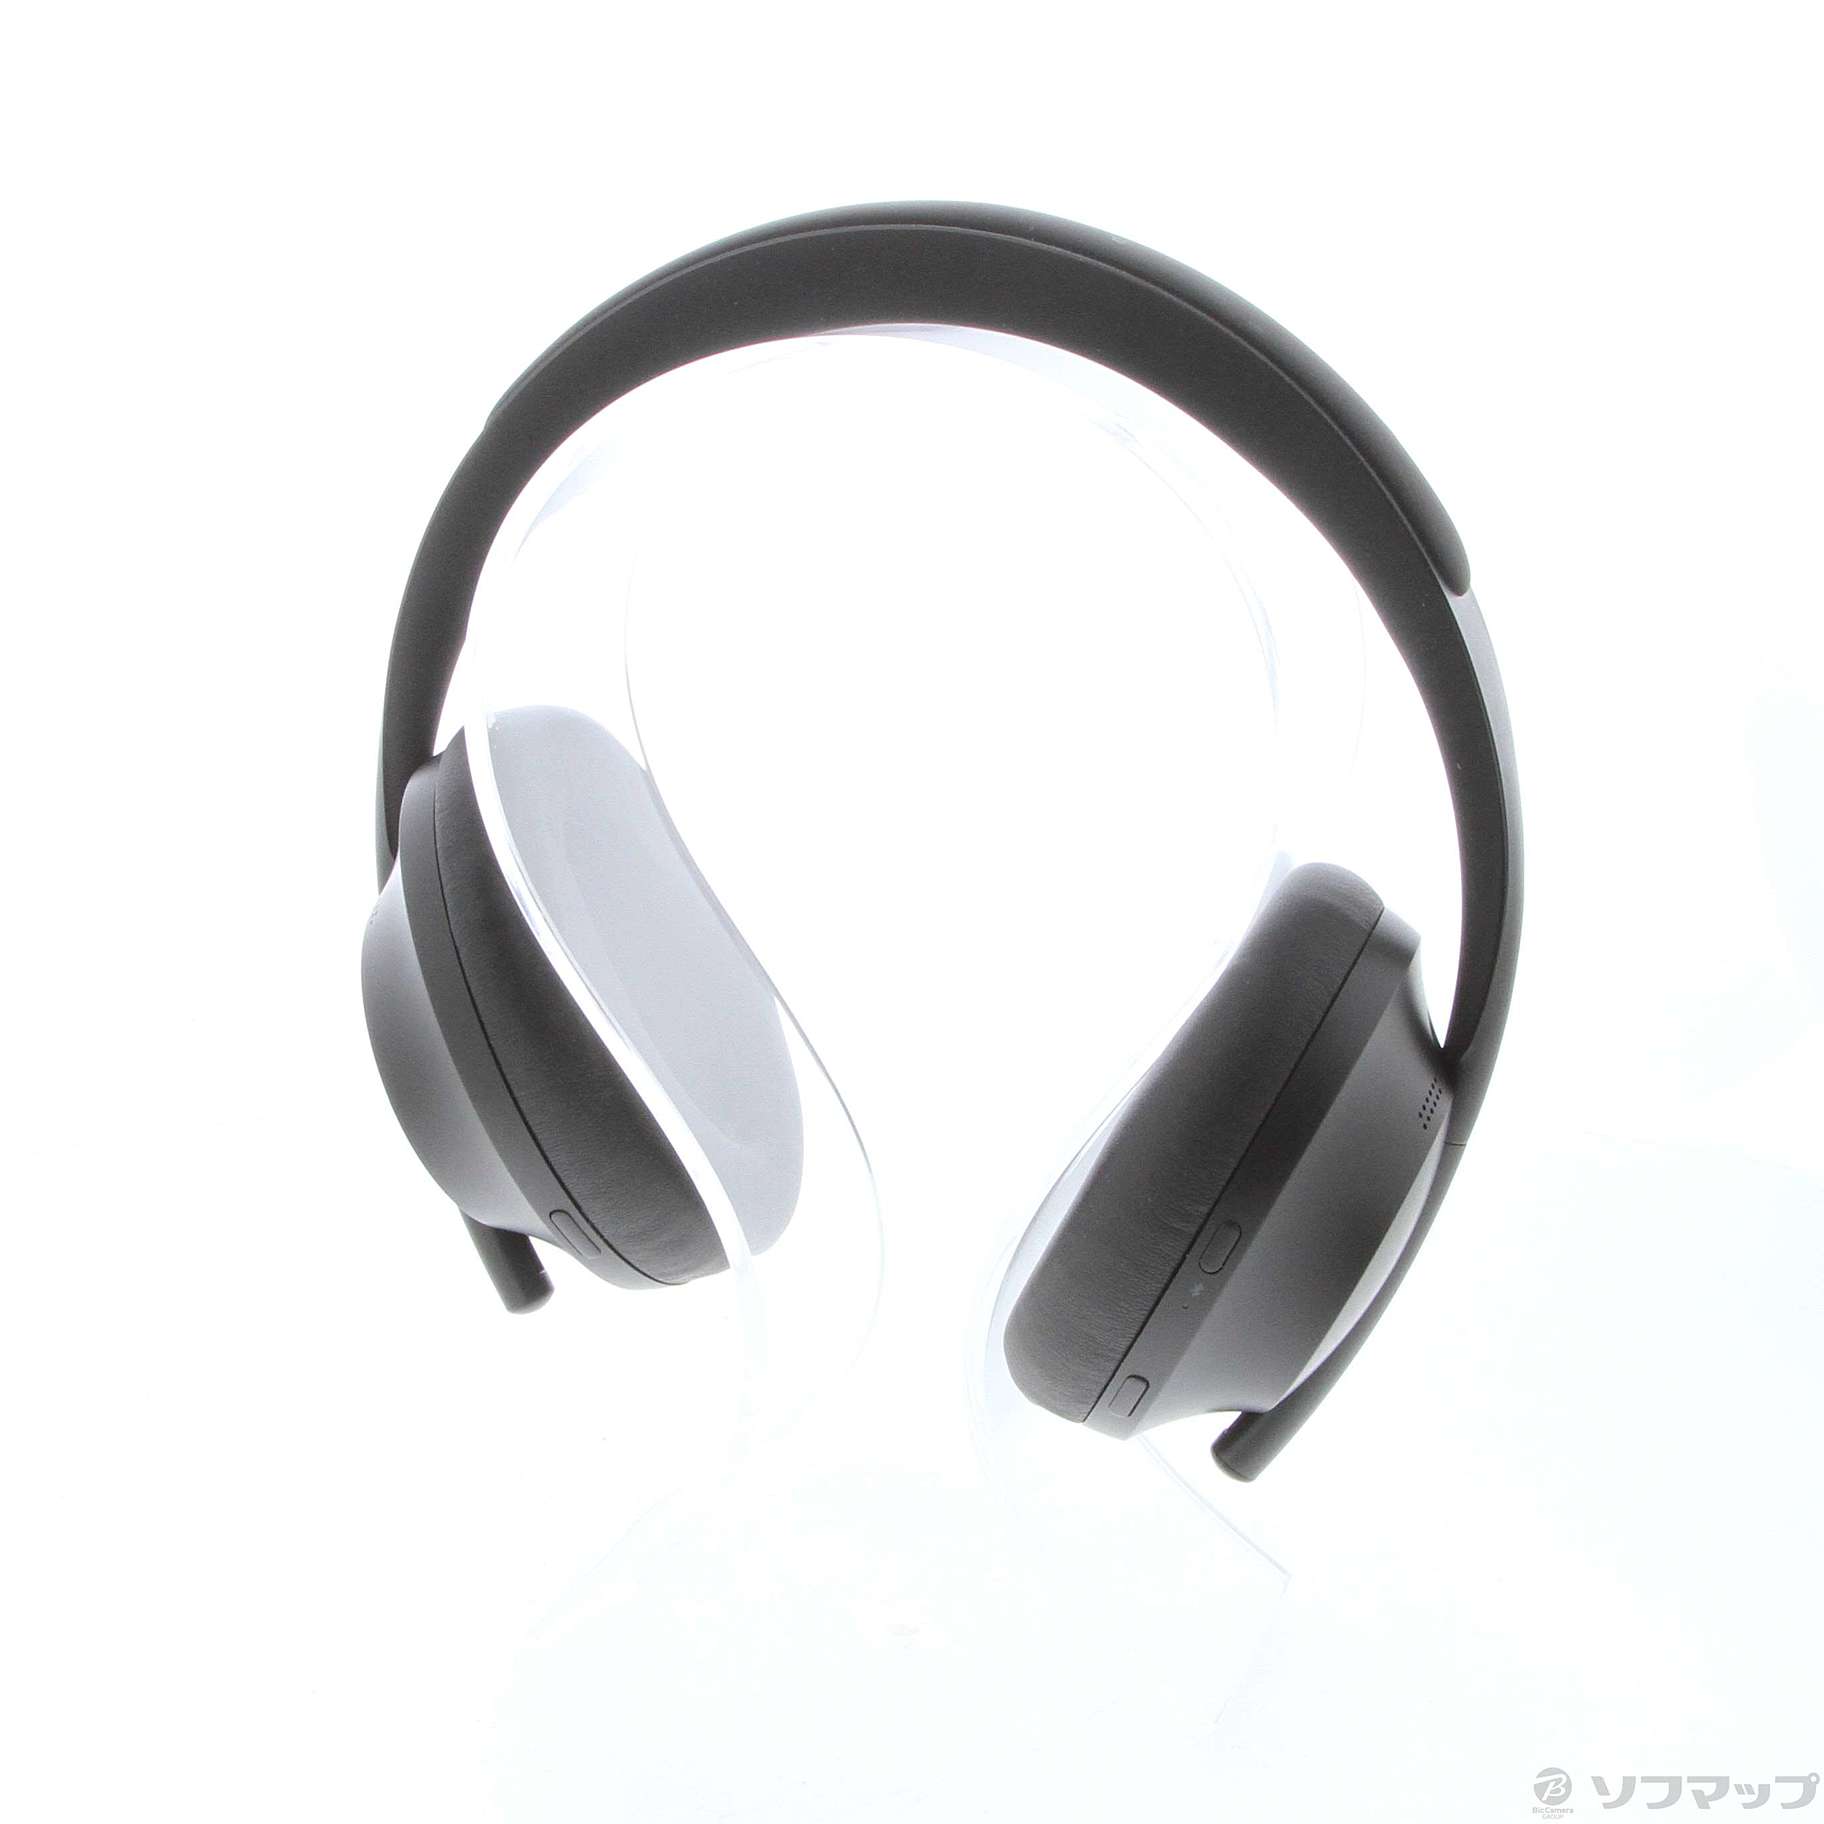 Bose Noise Cancelling Headphones 700 トリプルブラック